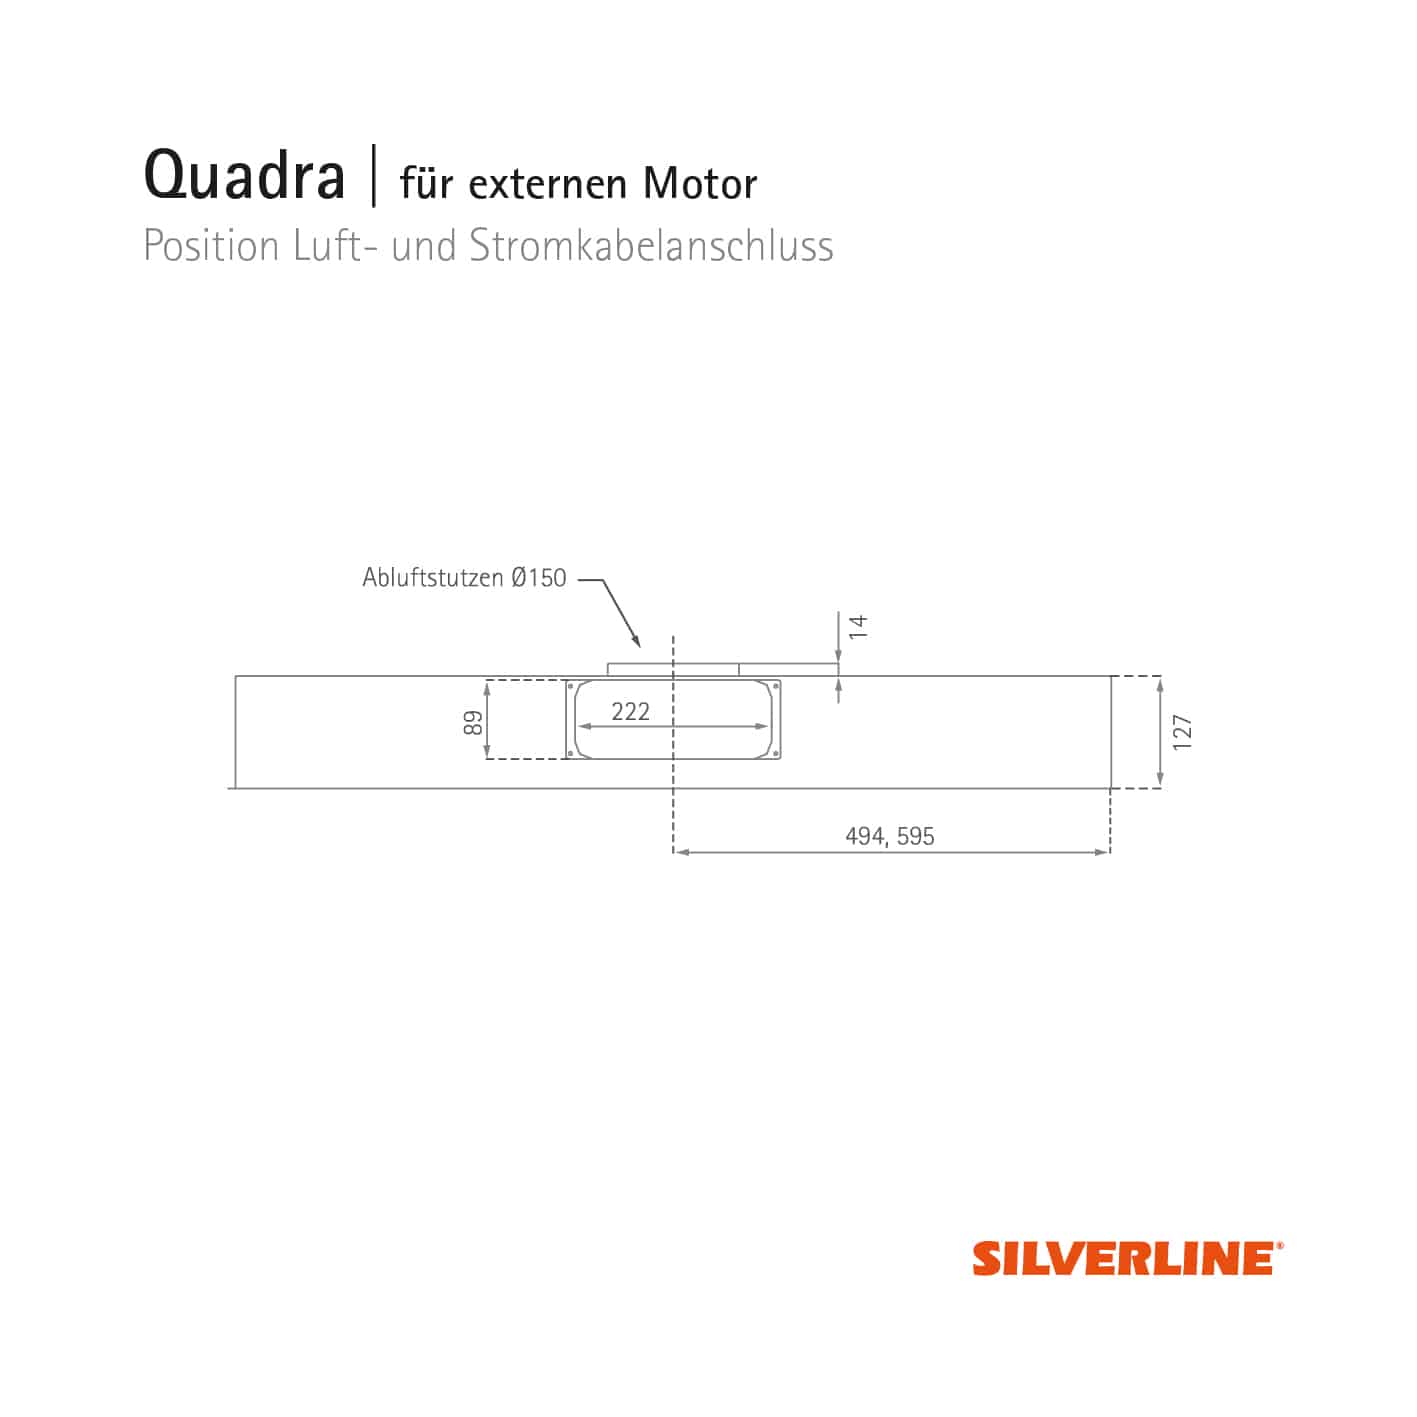 SILVERLINE QUD 124 S Quadra Deckenhaube//Dunstabzugshaube//Inselhaube 120 cm//C